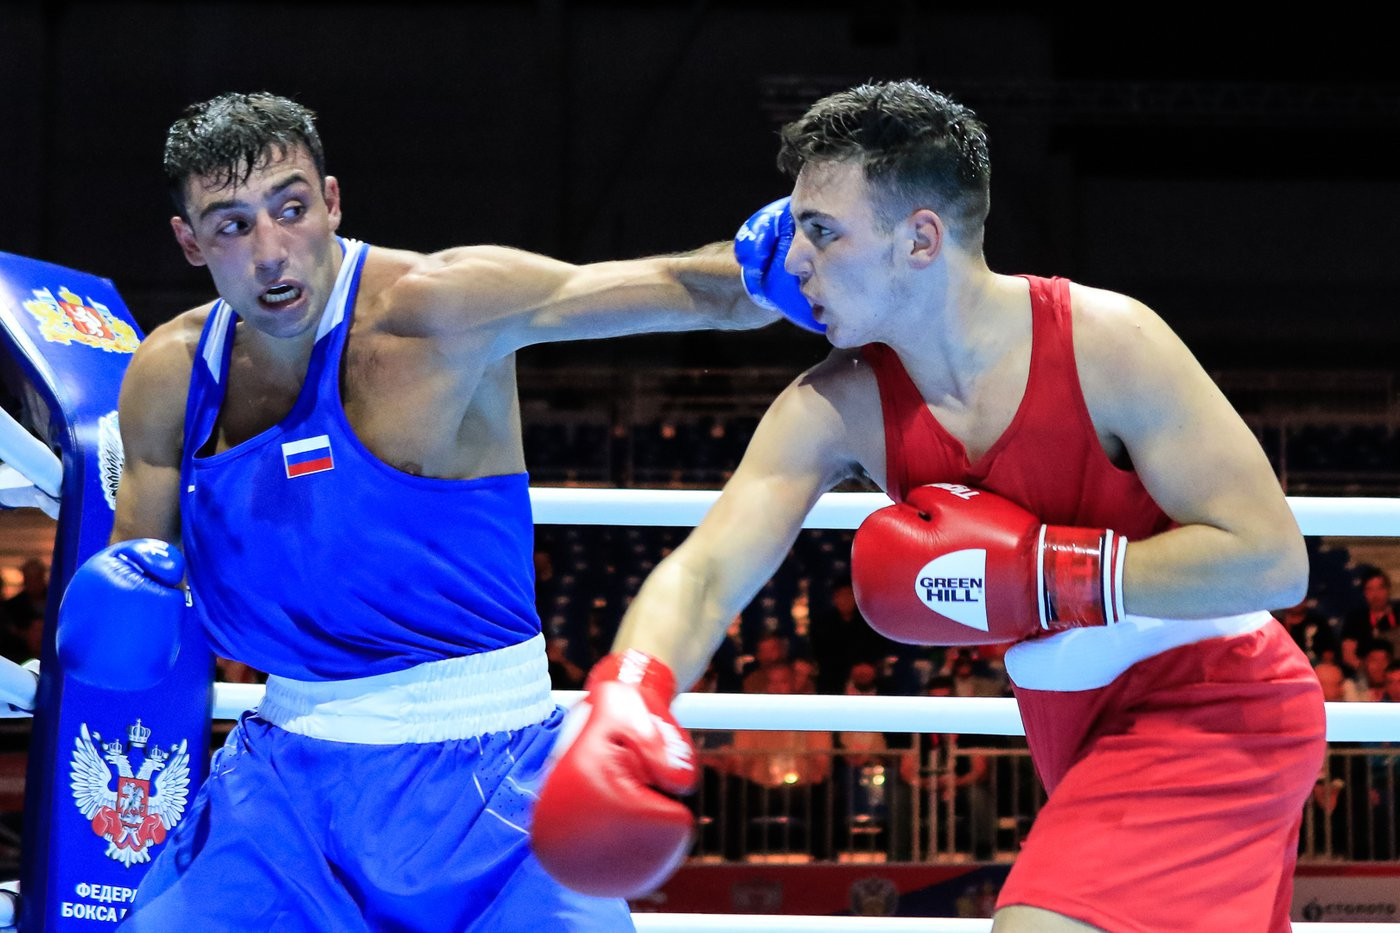 Russia's Georgii Kushitashvili defeated Sammy Lee of Wales ©Yekaterinburg 2019